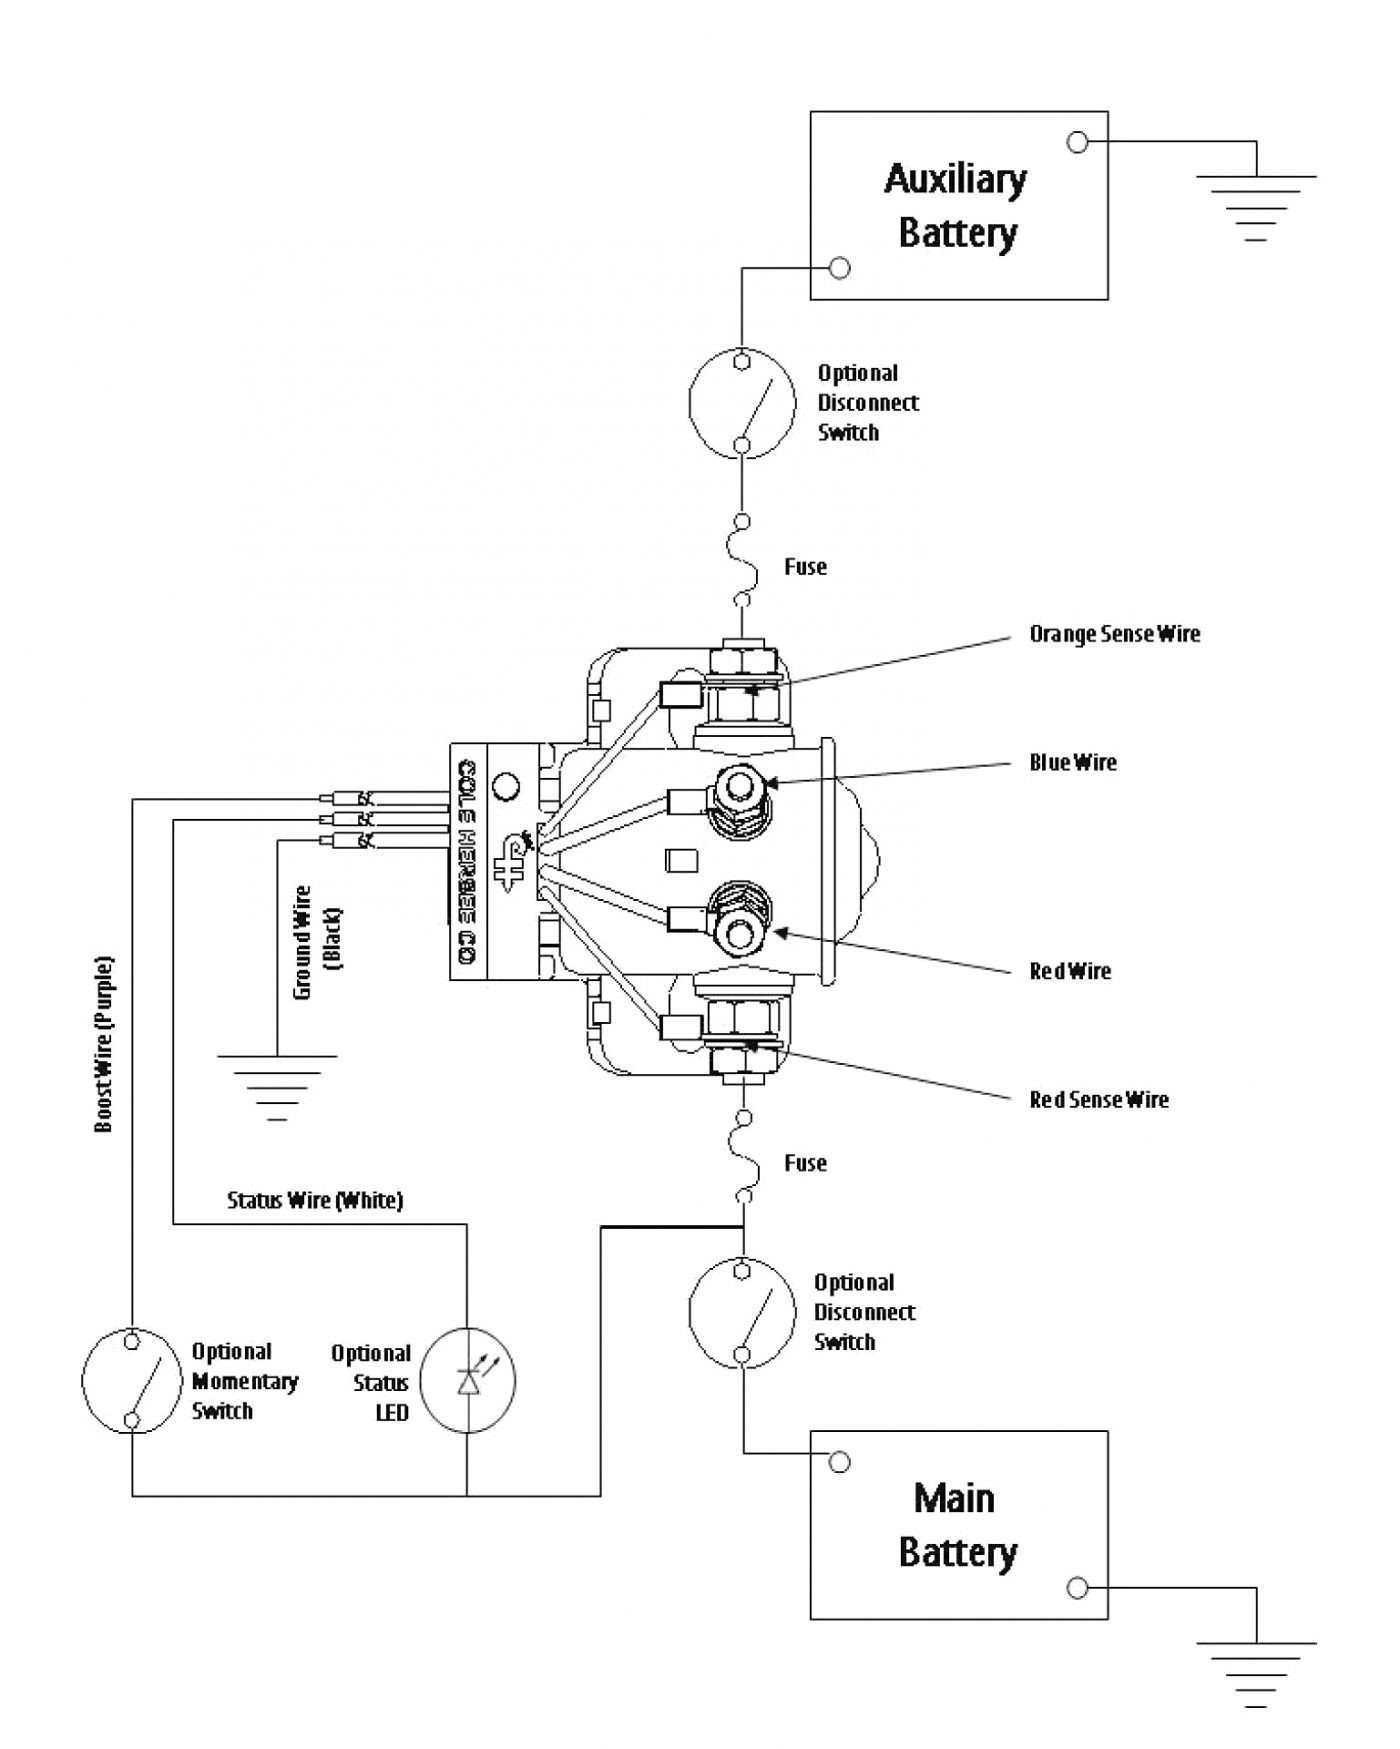 Wiring Diagram for Boat Alternator New Wiring Diagram for isolator Alternator to Battery Wiring Diagram